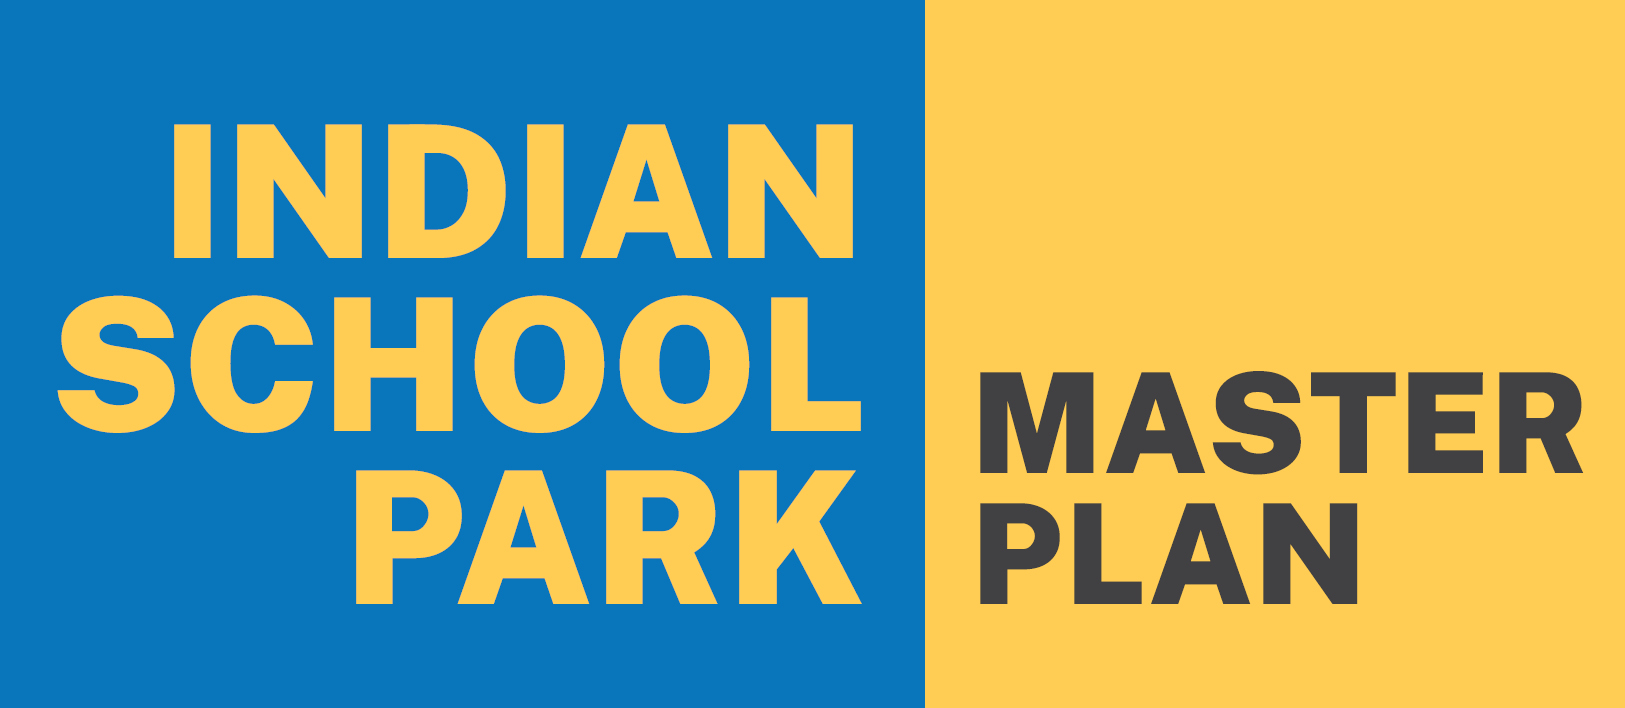 Scottsdale Indian School Park Master Plan